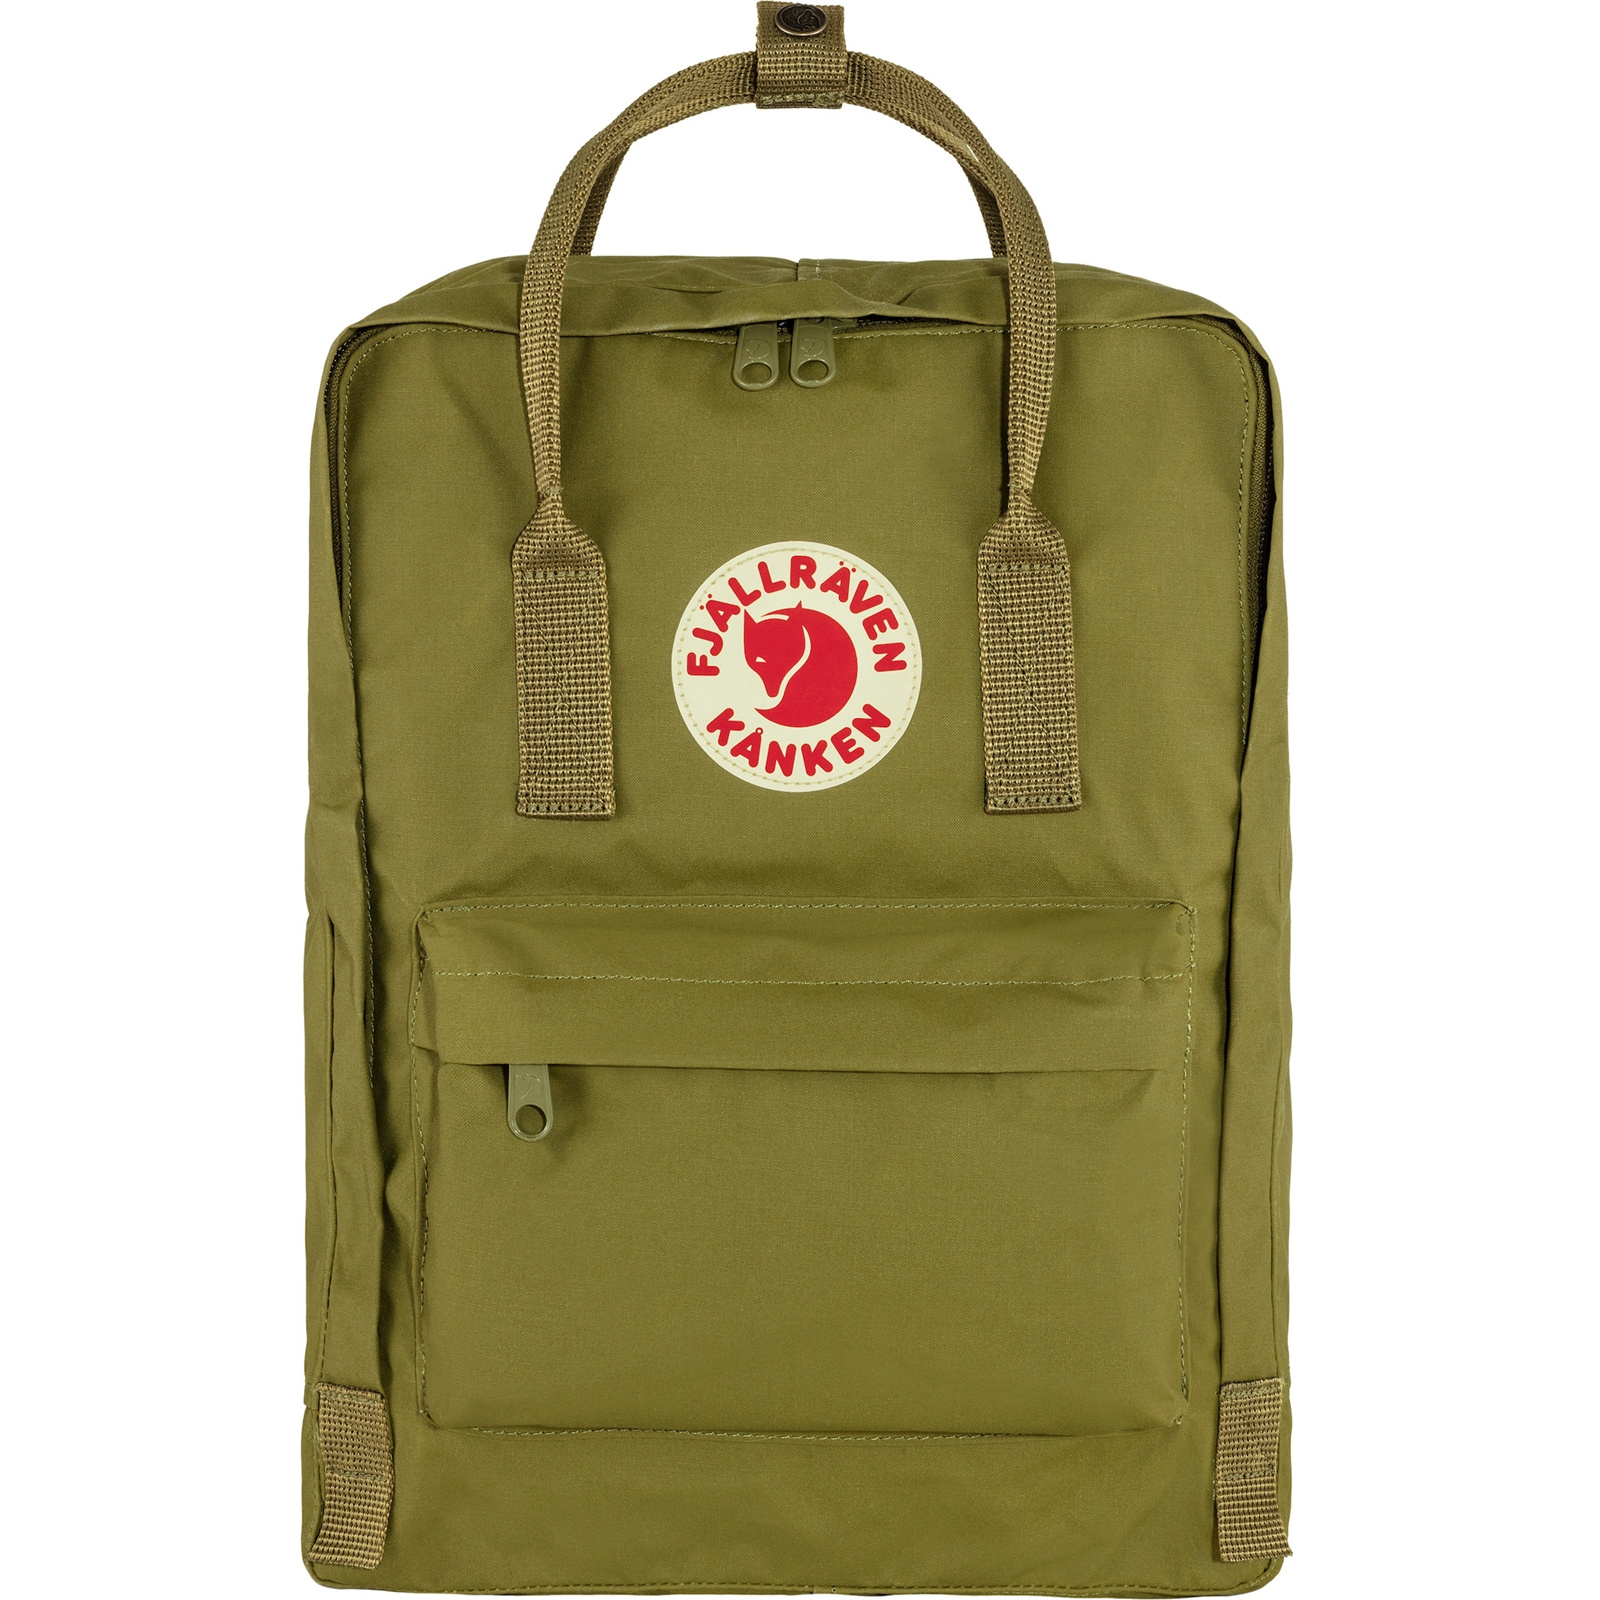 Fjallraven PLECAK Kanken Foliage Green | \ Categories: \ Backpacks/Bags Accessories \ Brands: Fjallraven Brands \ - 2 \ Fjallraven